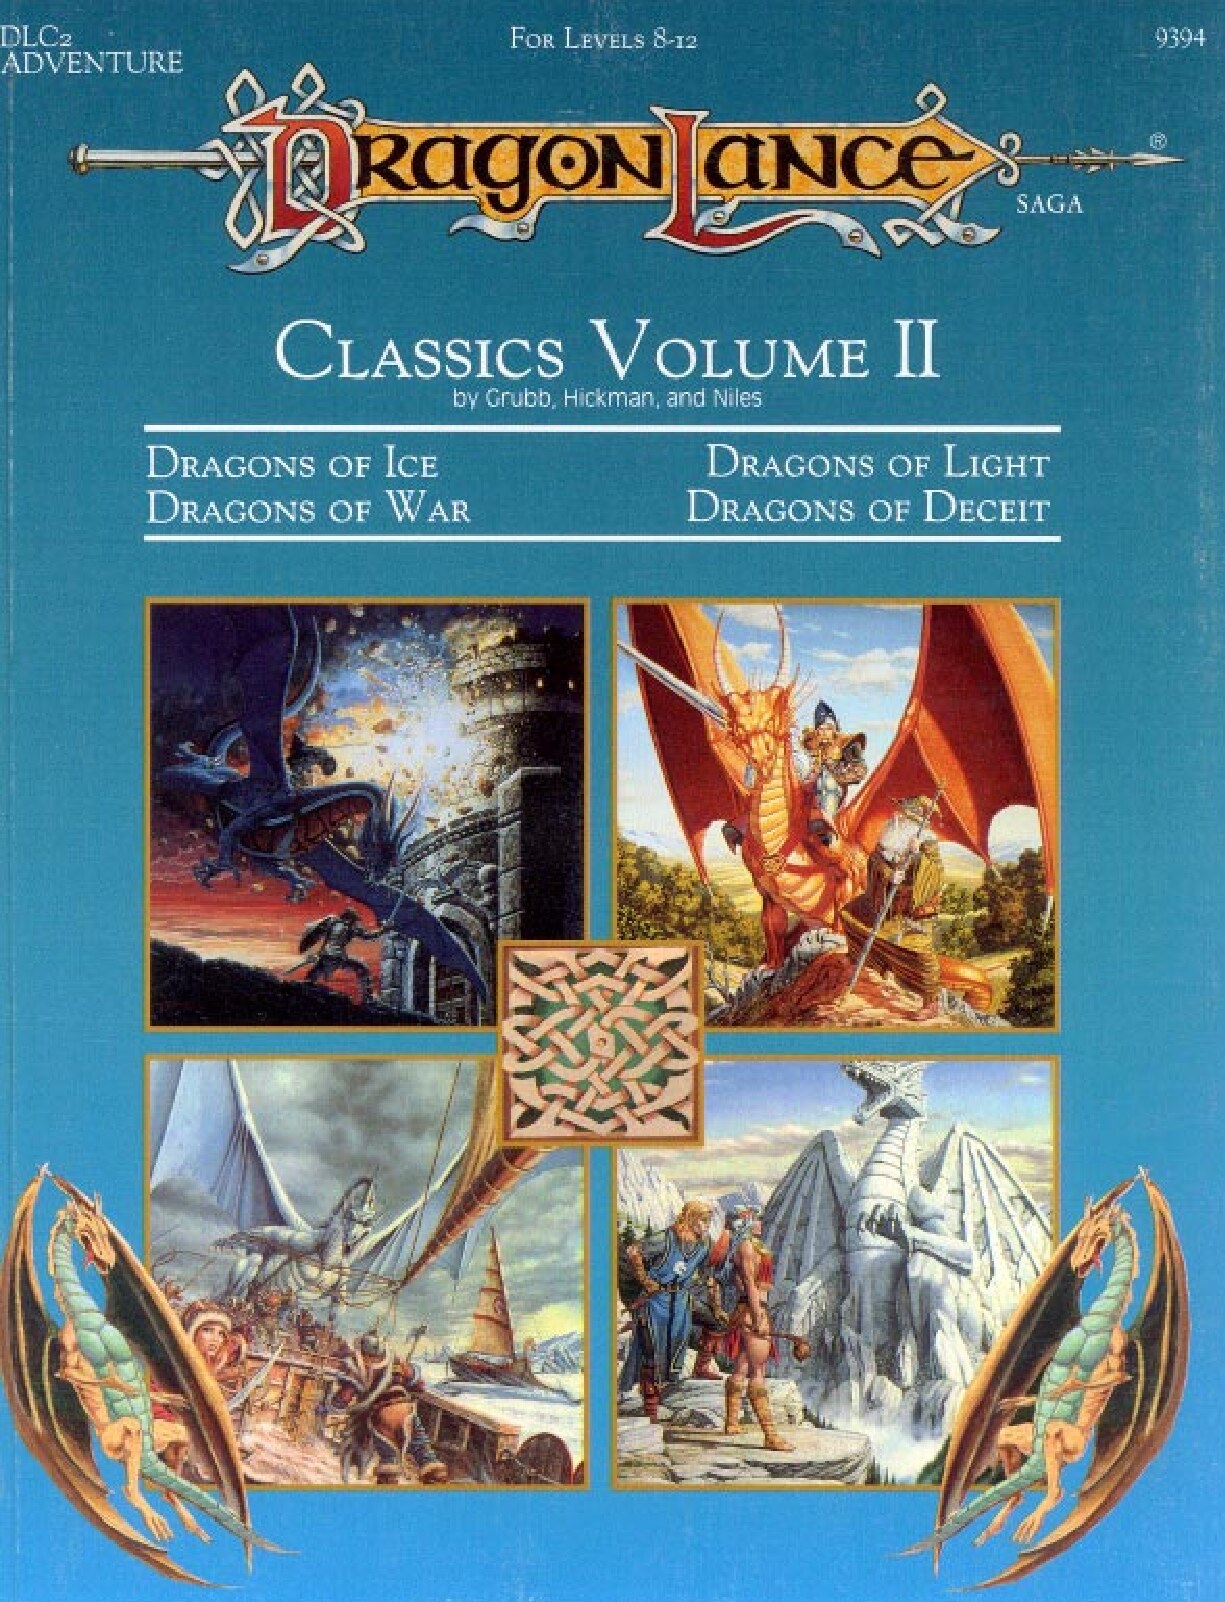 DragonLance Classics Volume II